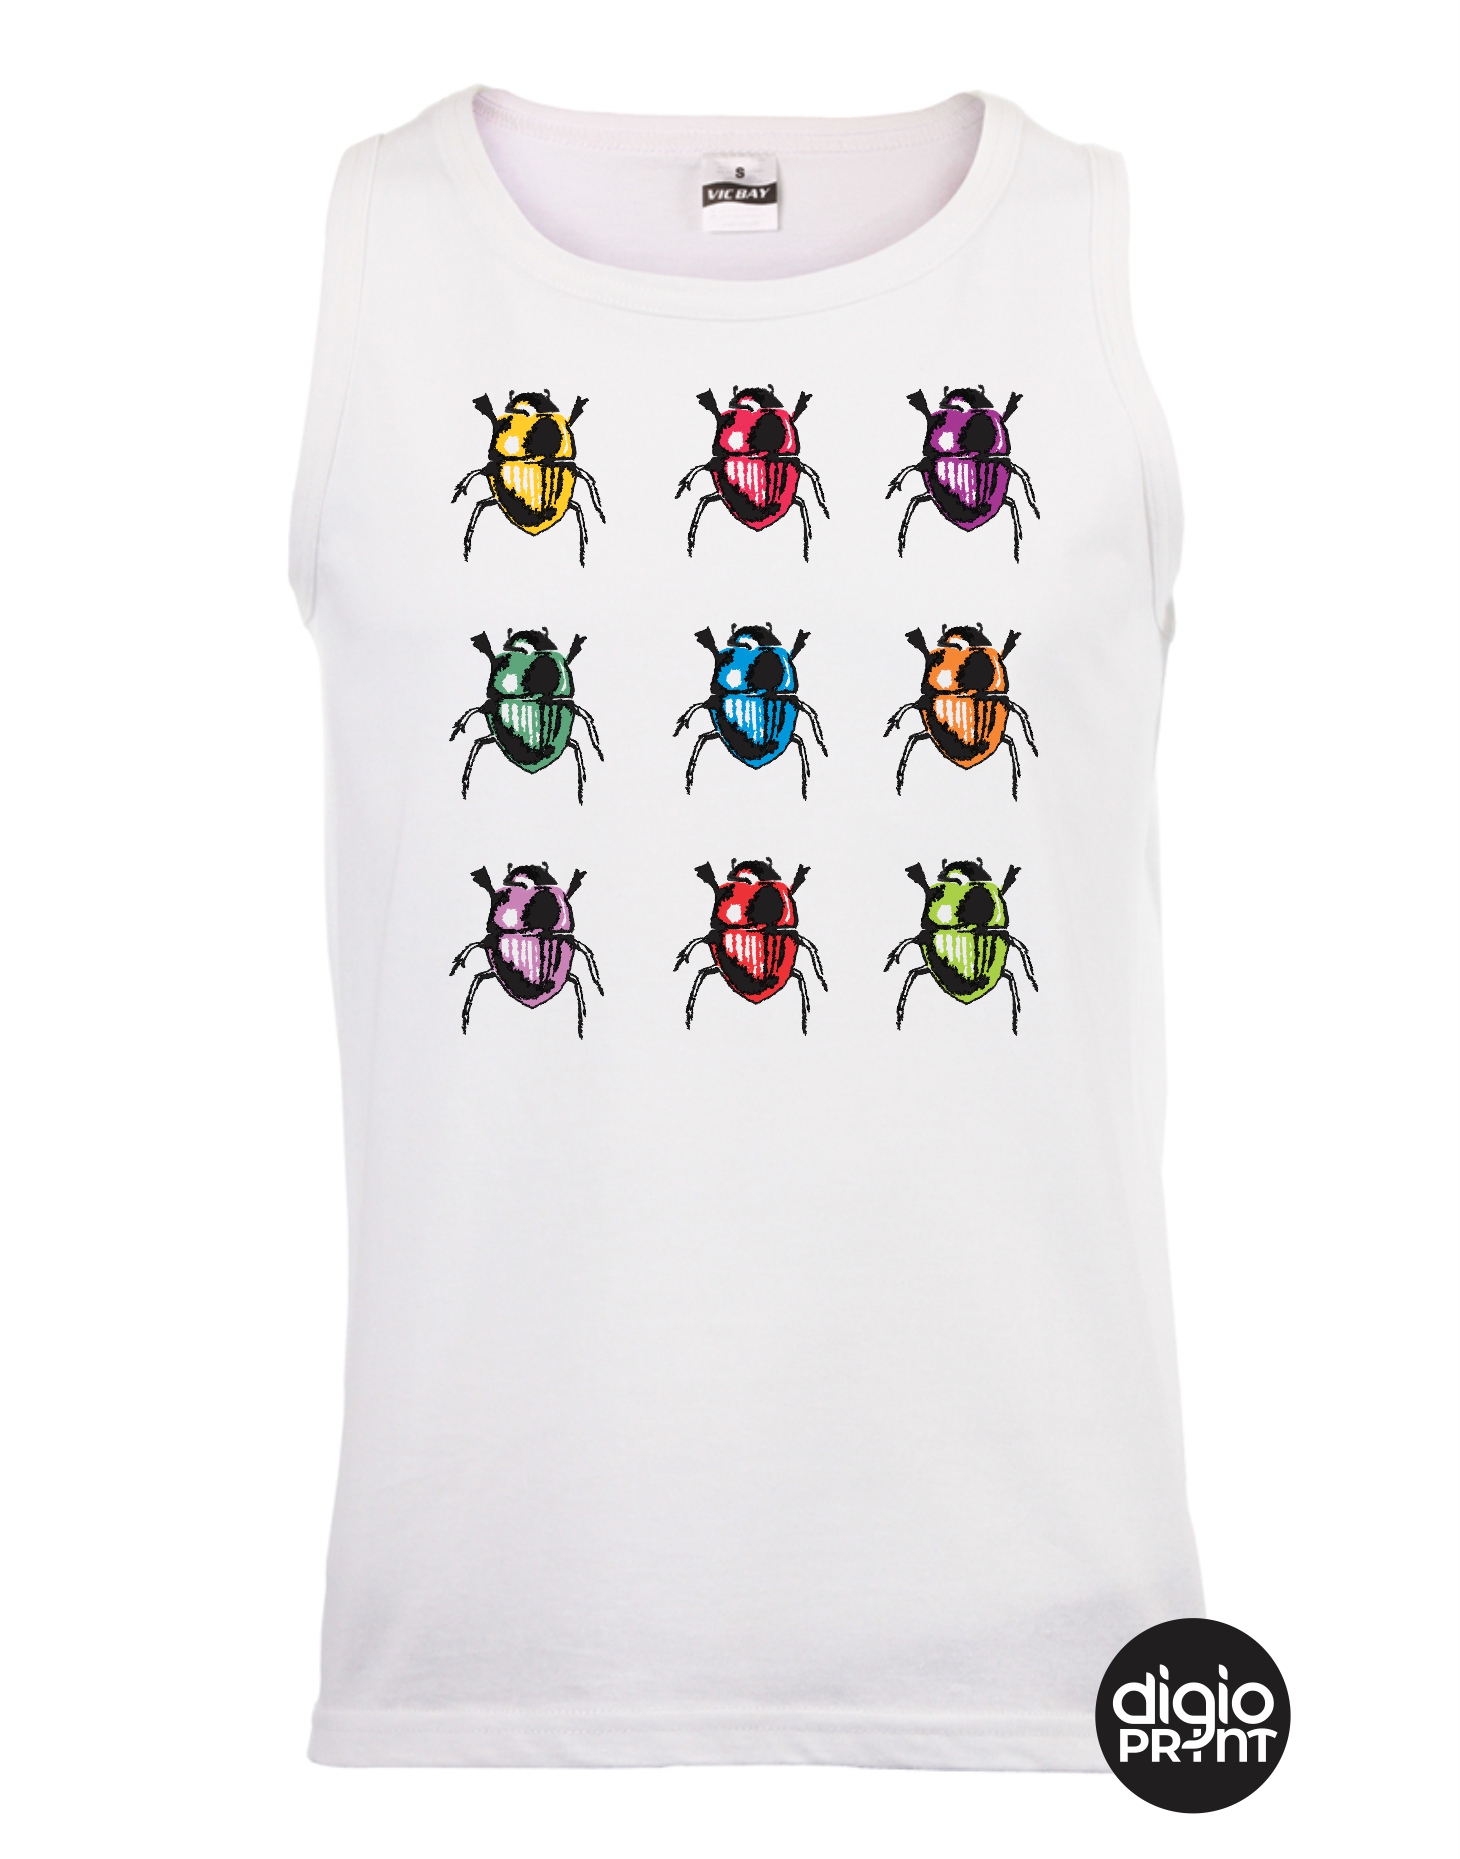 Beetles multi men's vest